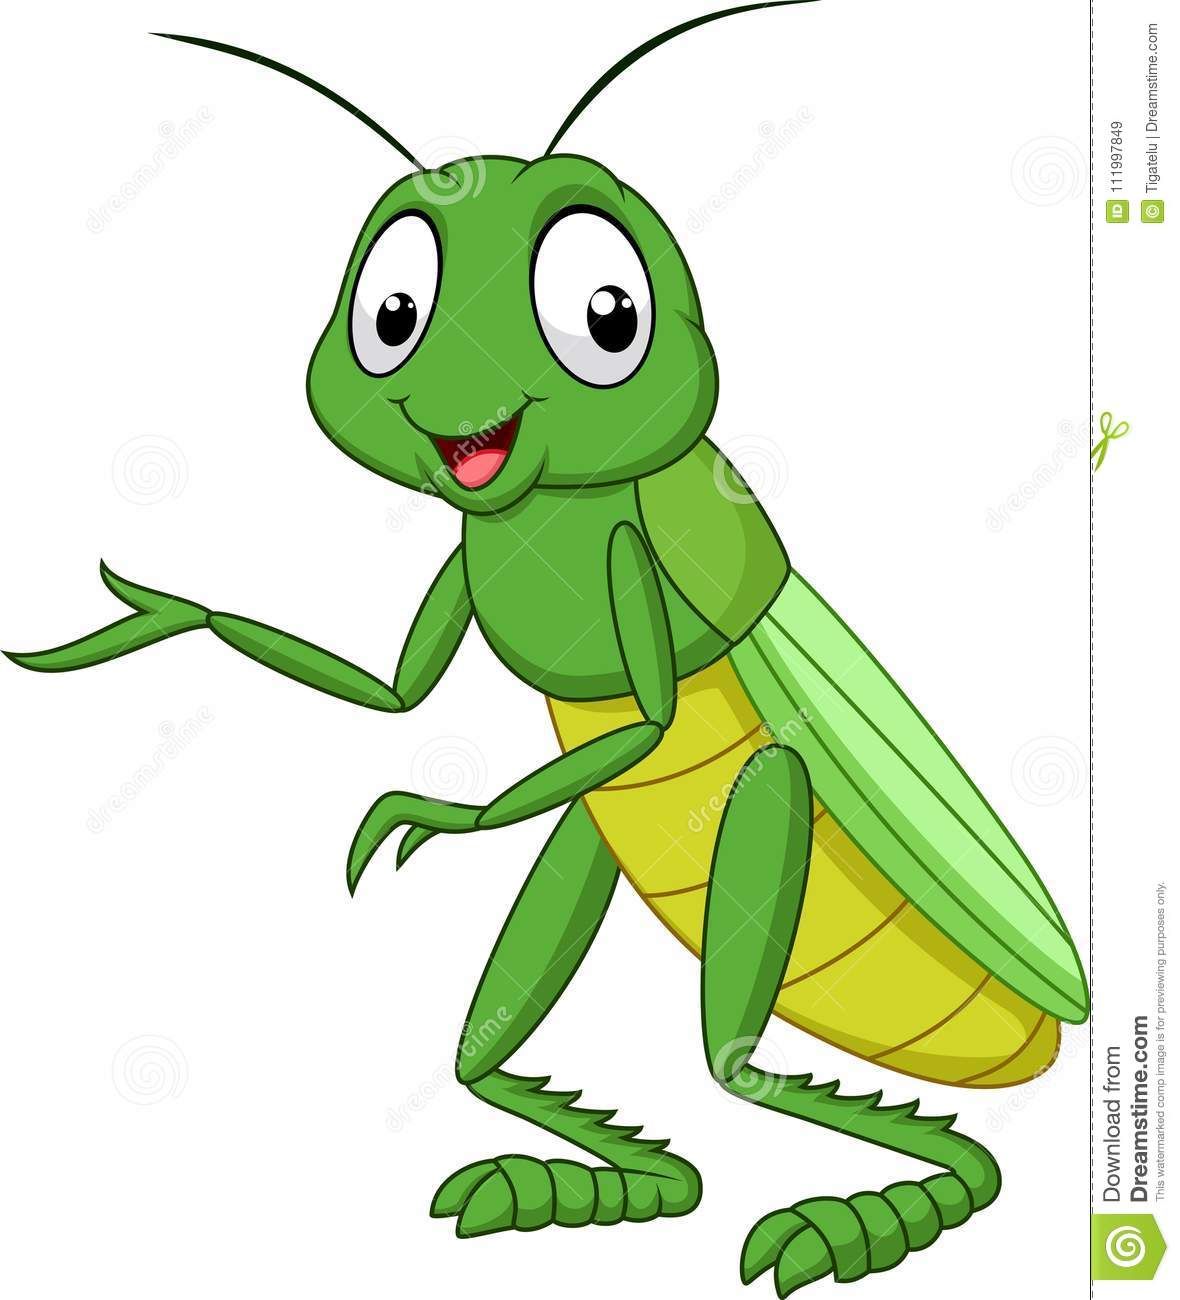 Cartoon isolated on white. Grasshopper clipart cricket